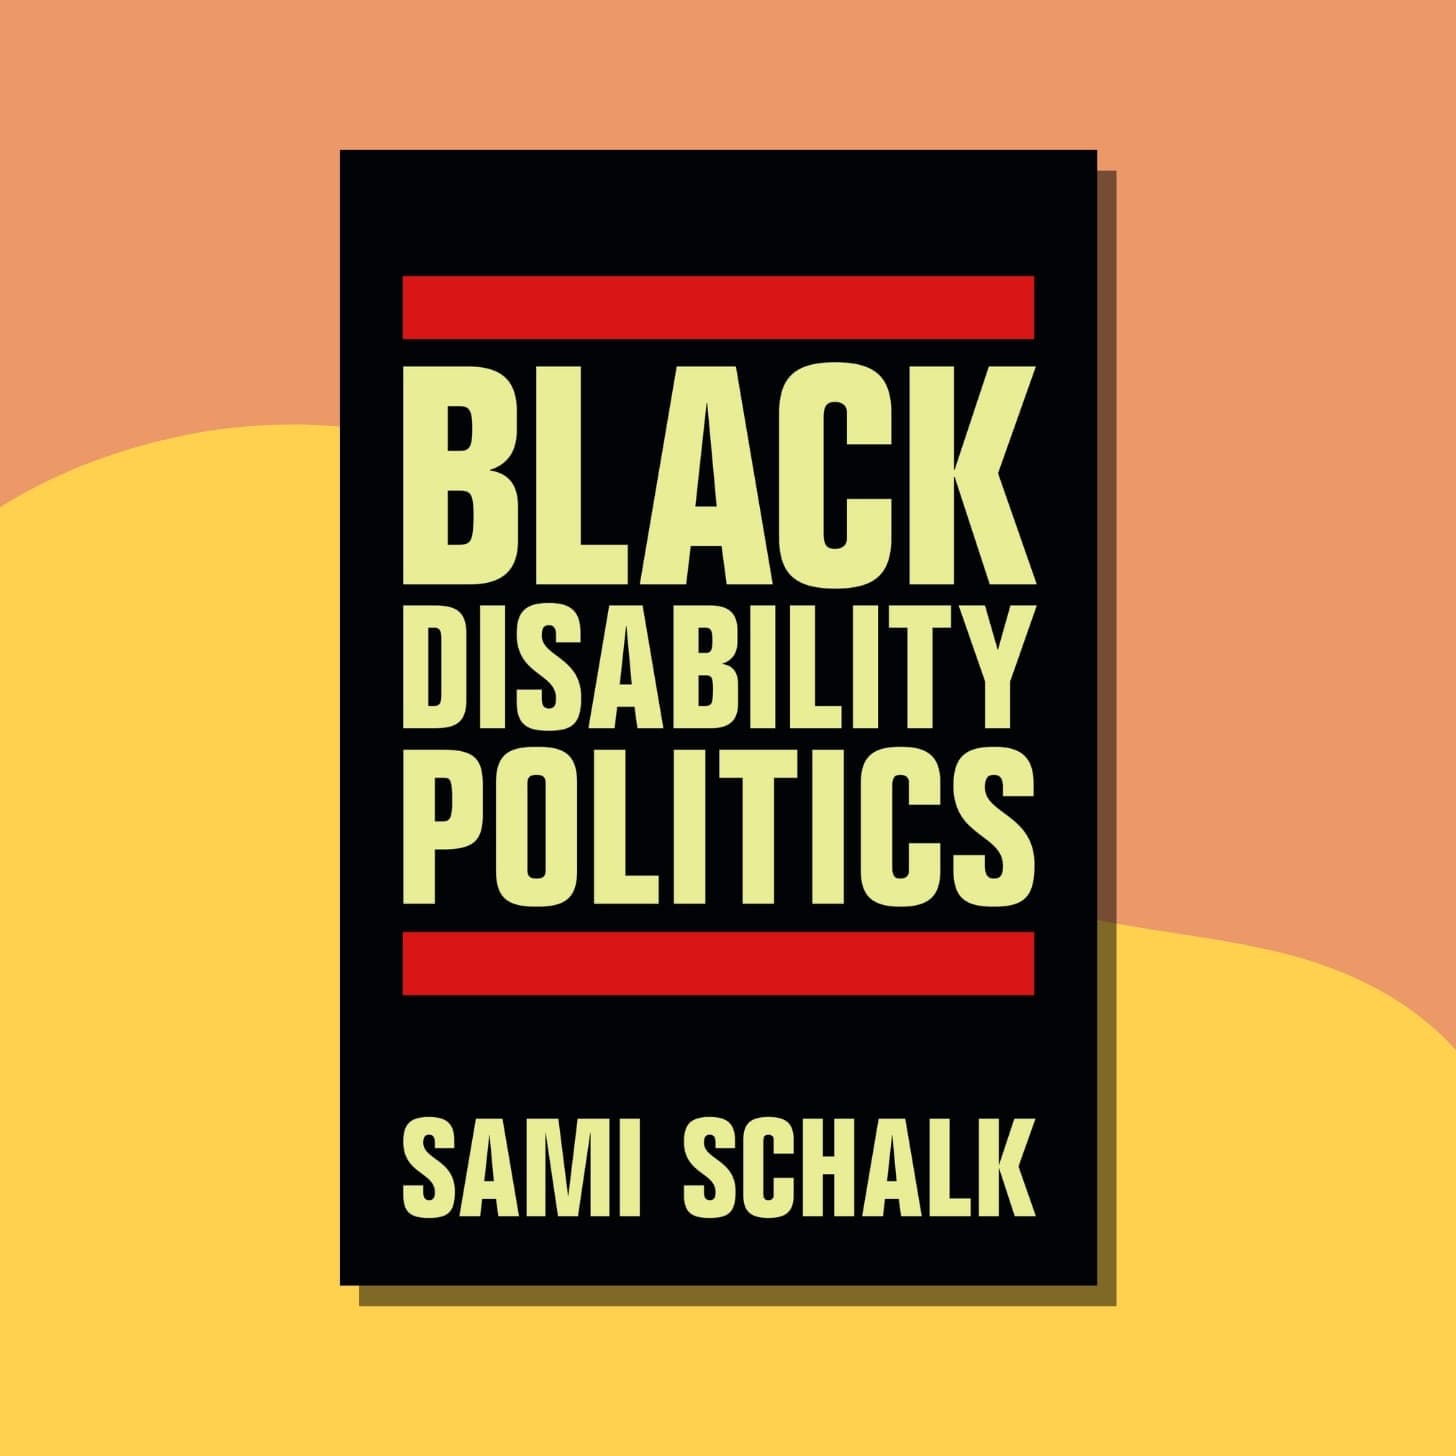 “Black Disability Politics” by Sami Schalk